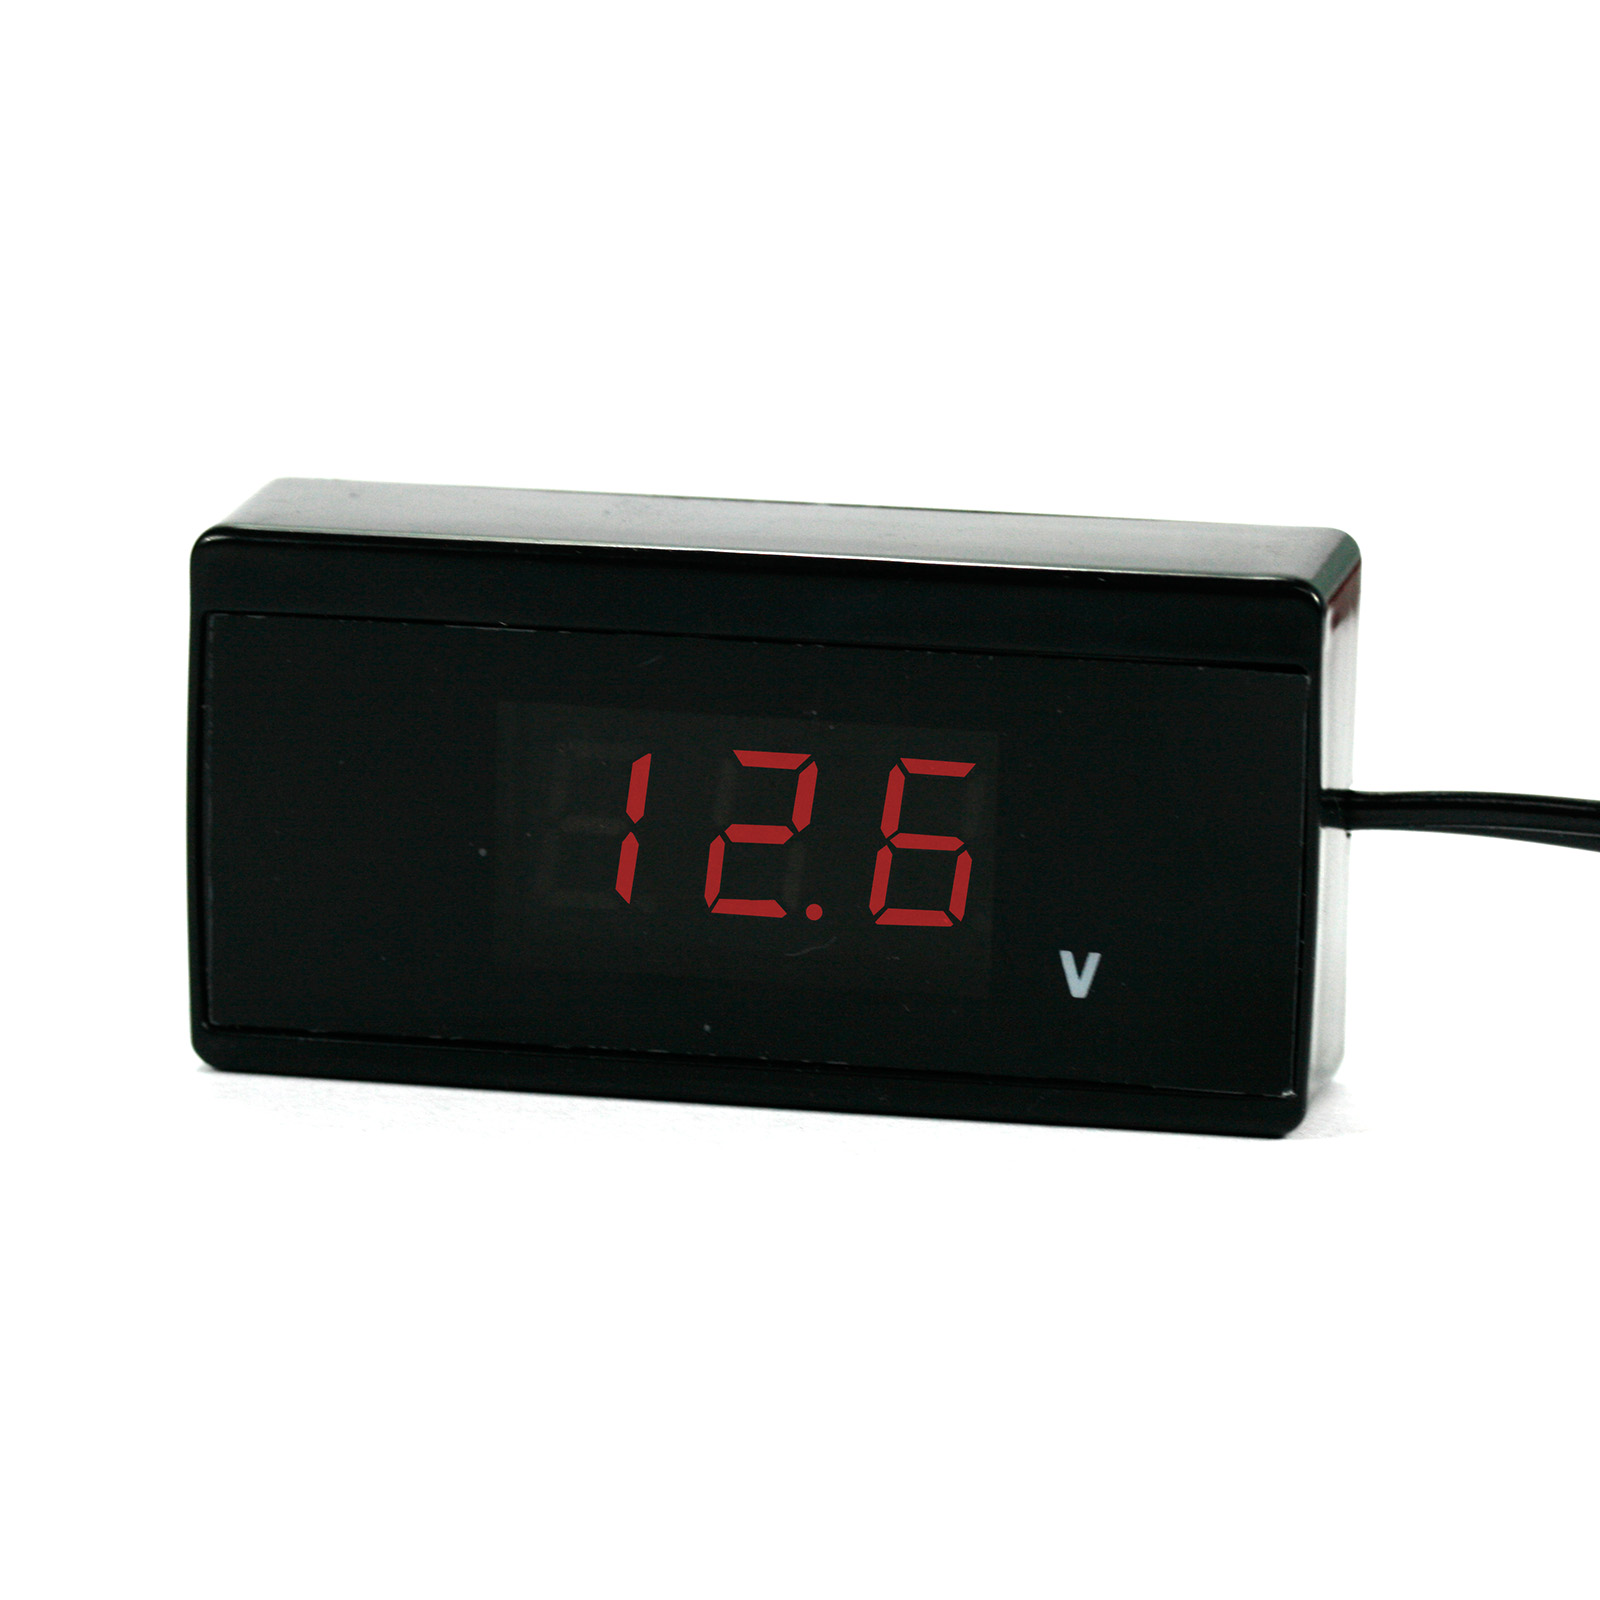 arduino 12v battery voltage monitor